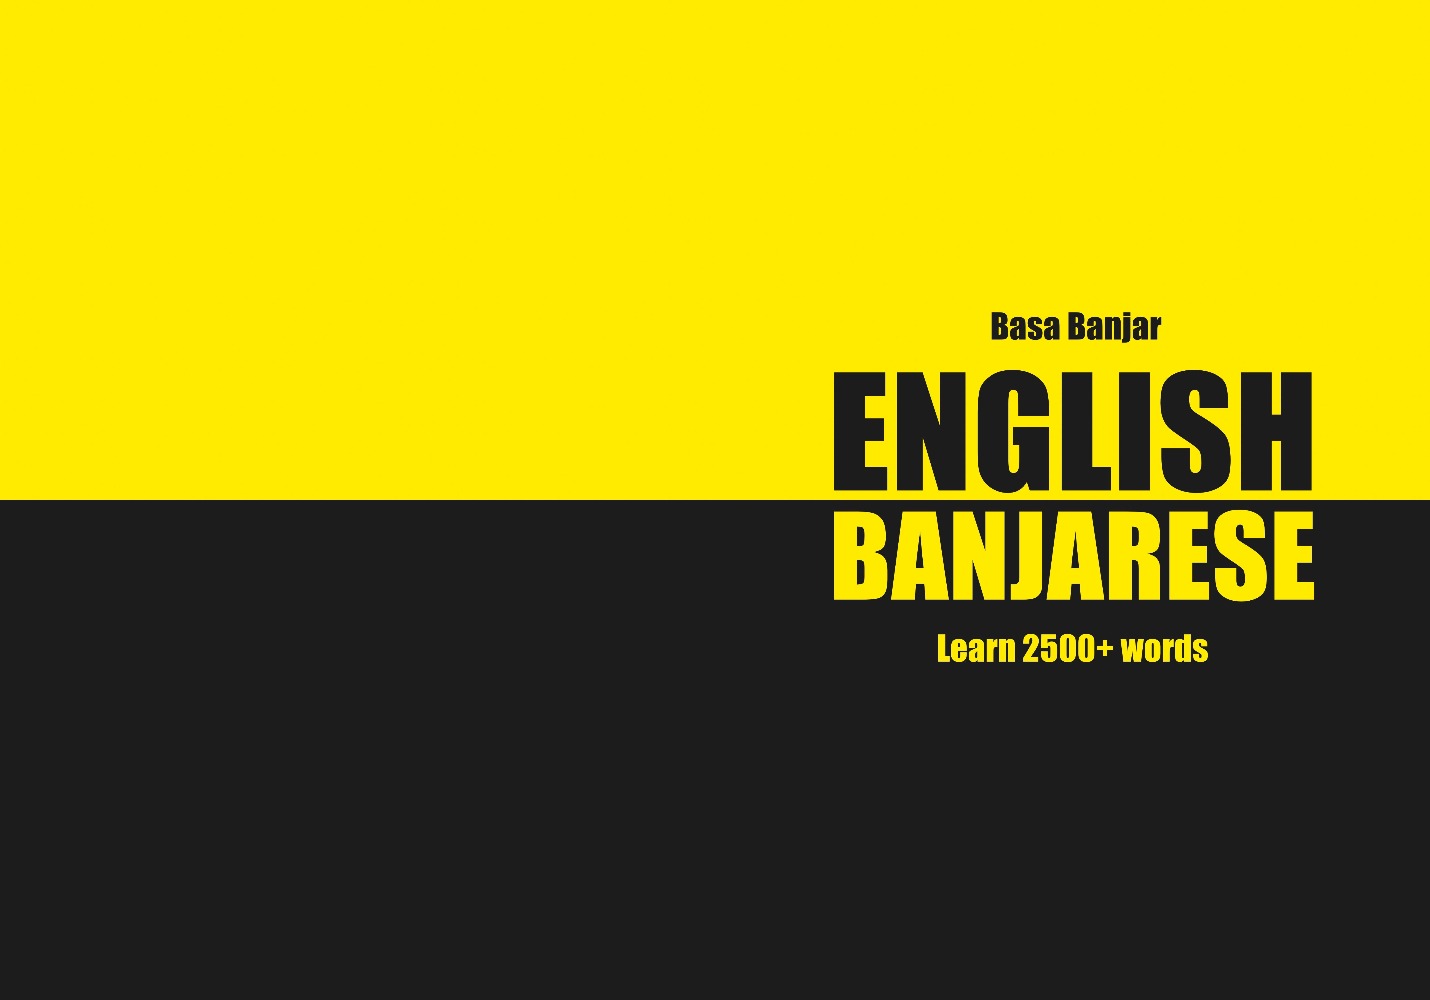 Banjarese language learning notebook cover